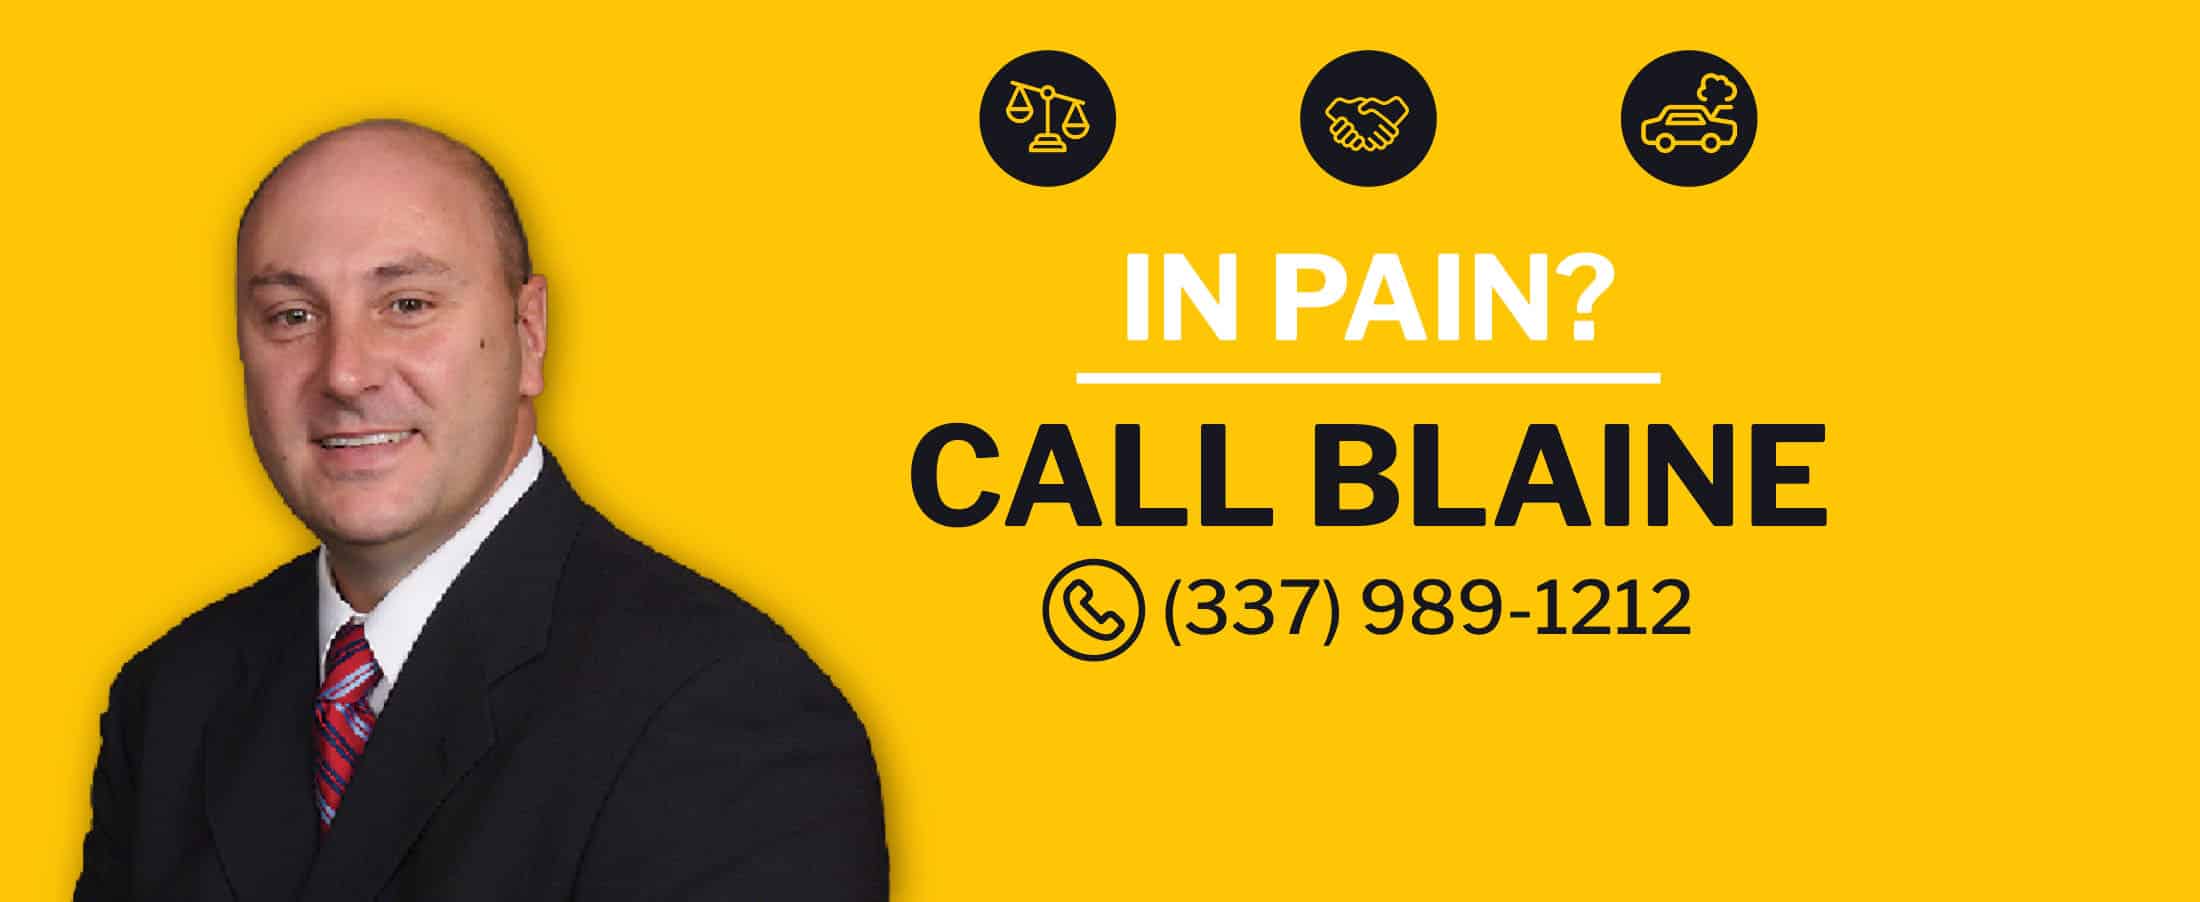 In Paine? Call Blaine.